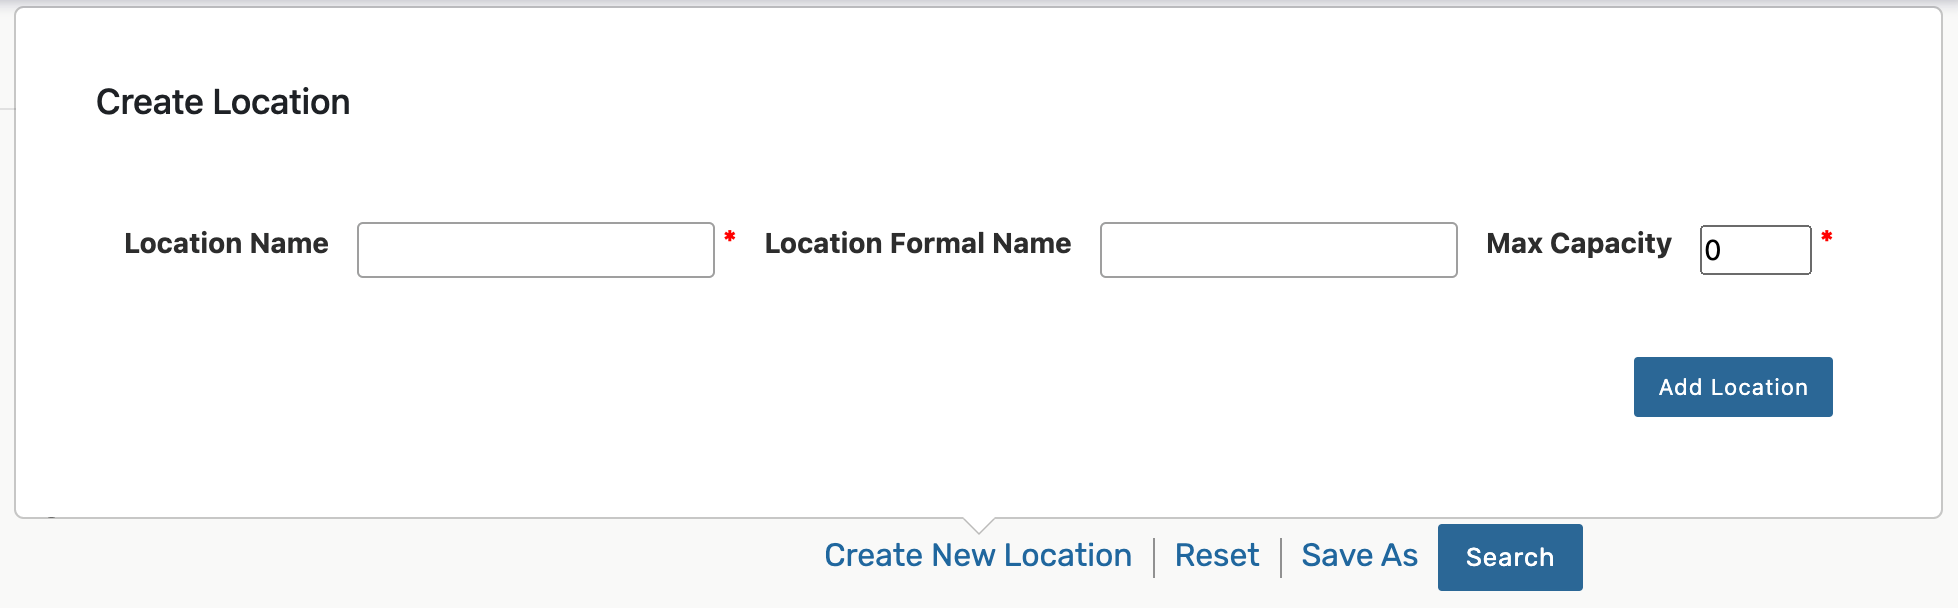 Create location form